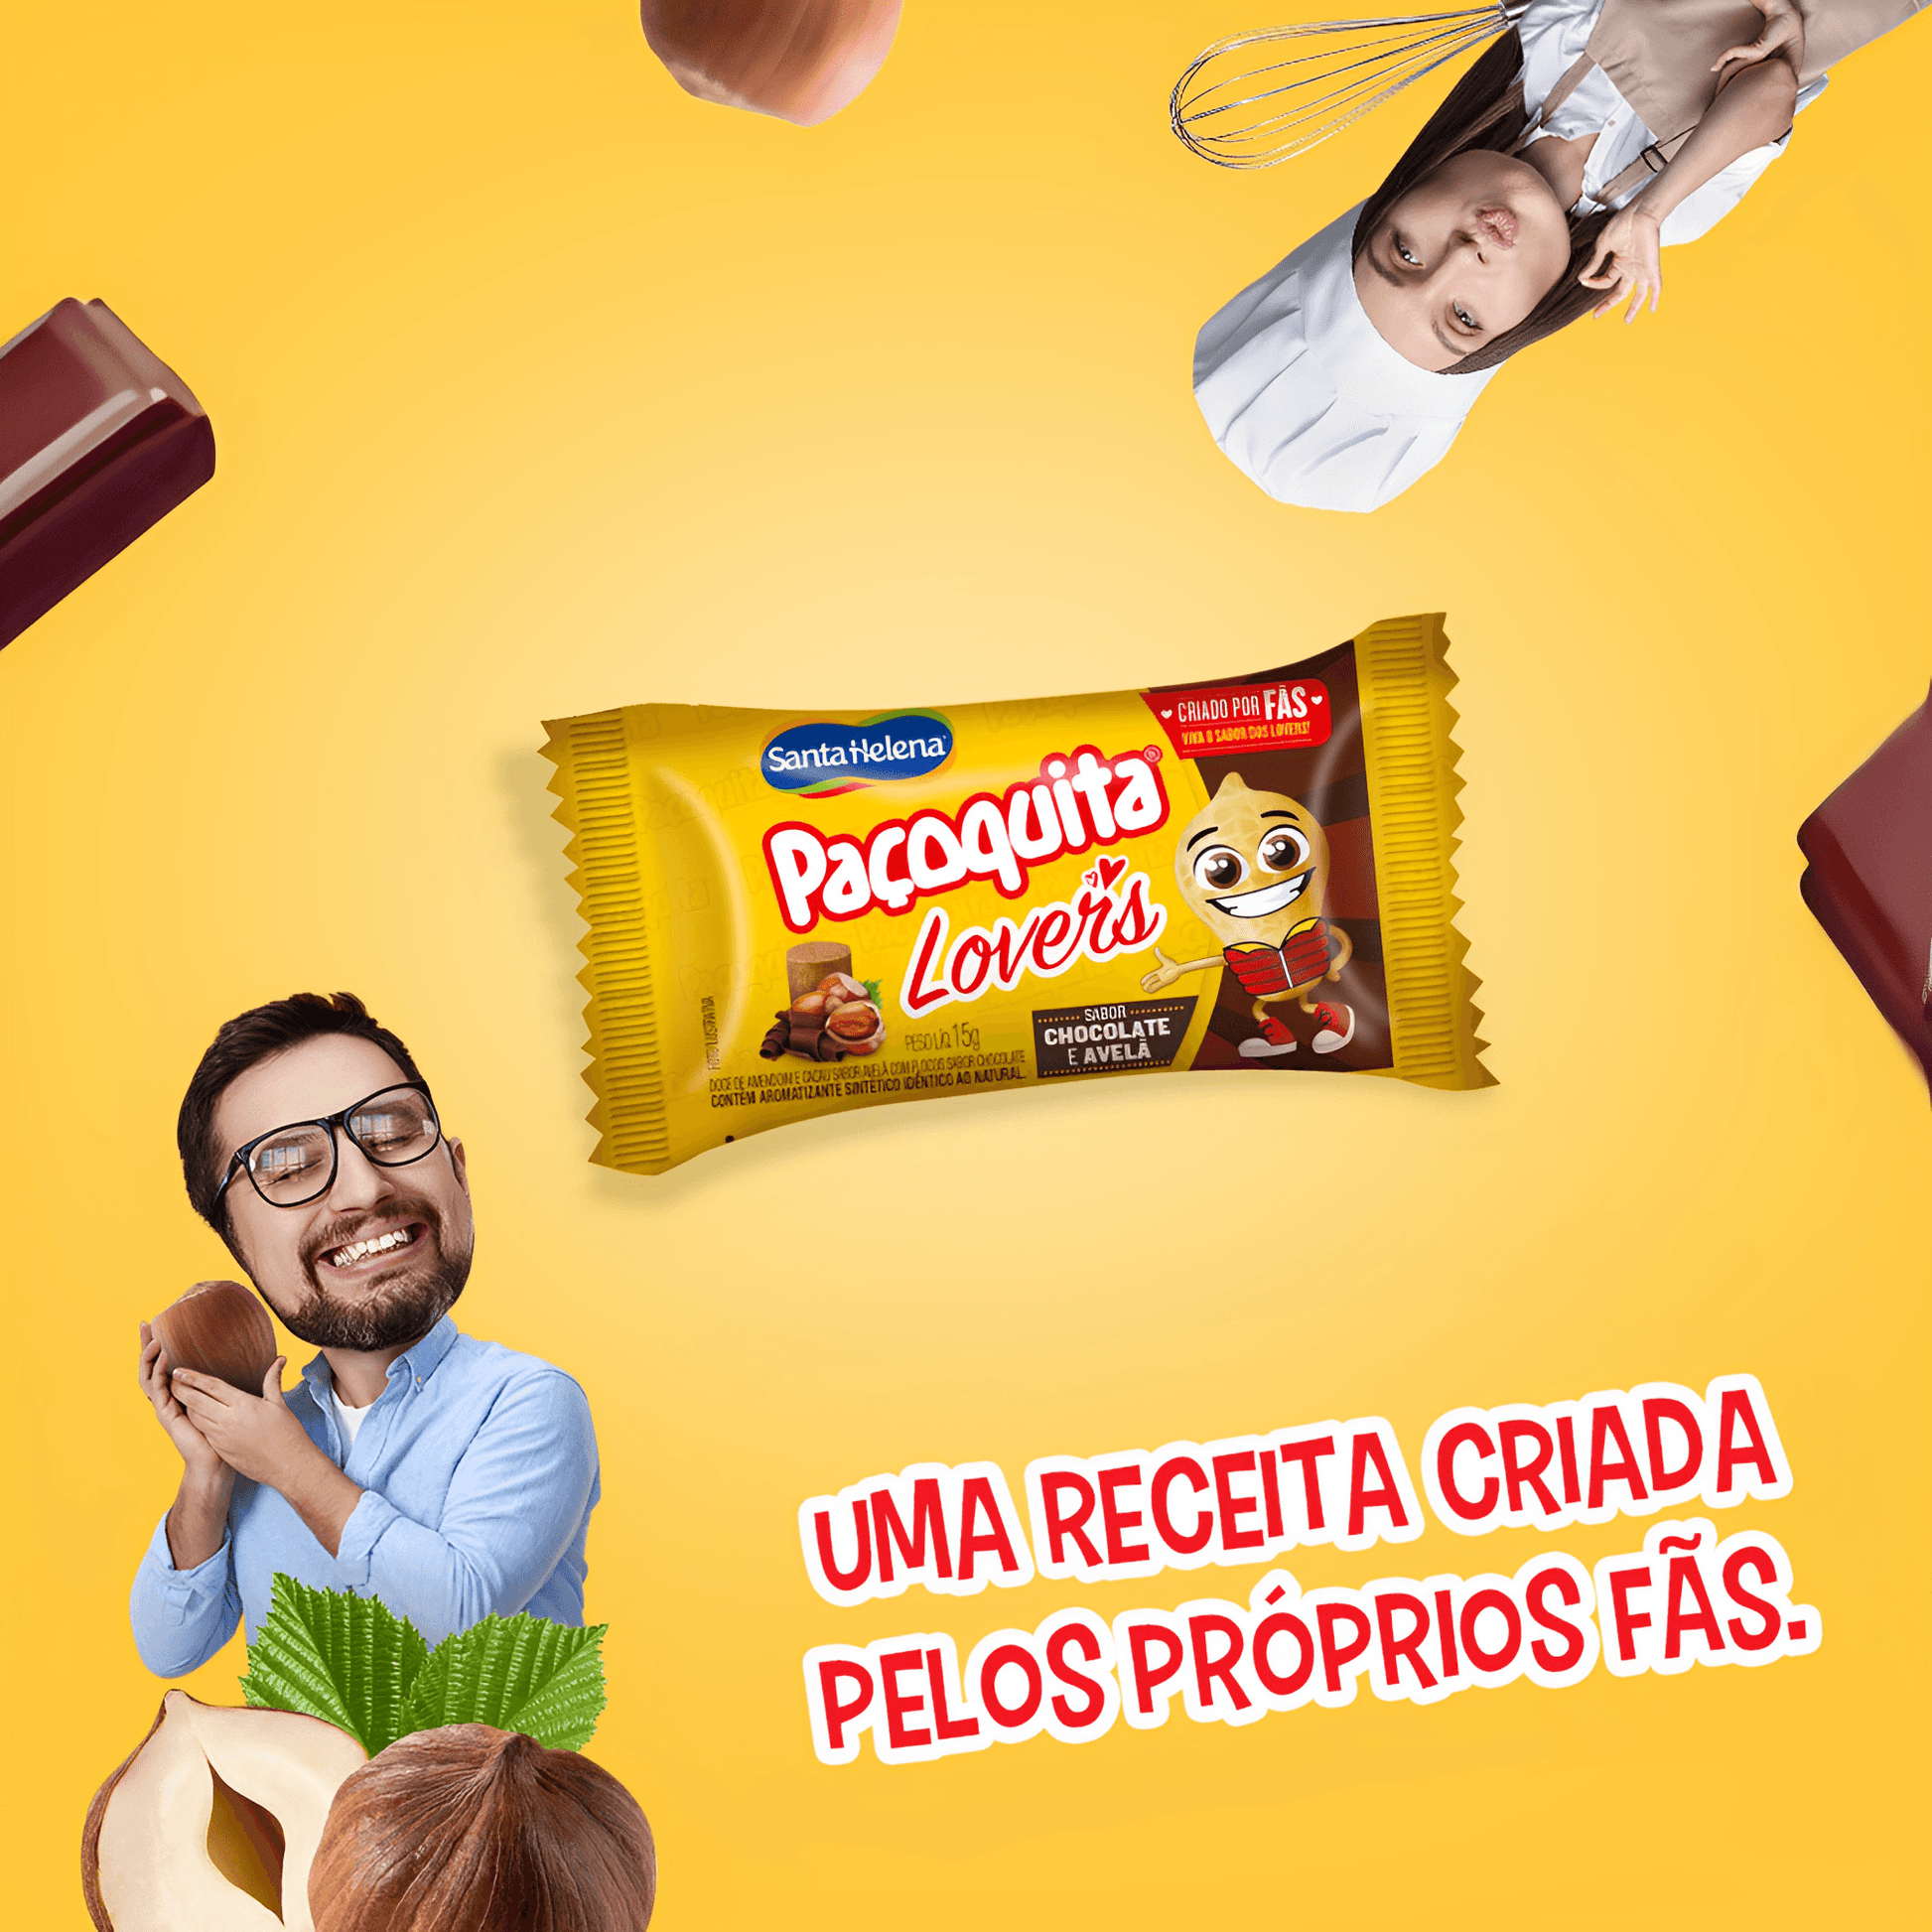 Paçoquita Lovers Chocolate and Hazelnut Sweet Ground Peanut 12.70 oz (Pack of 3) - Brazilian Shop